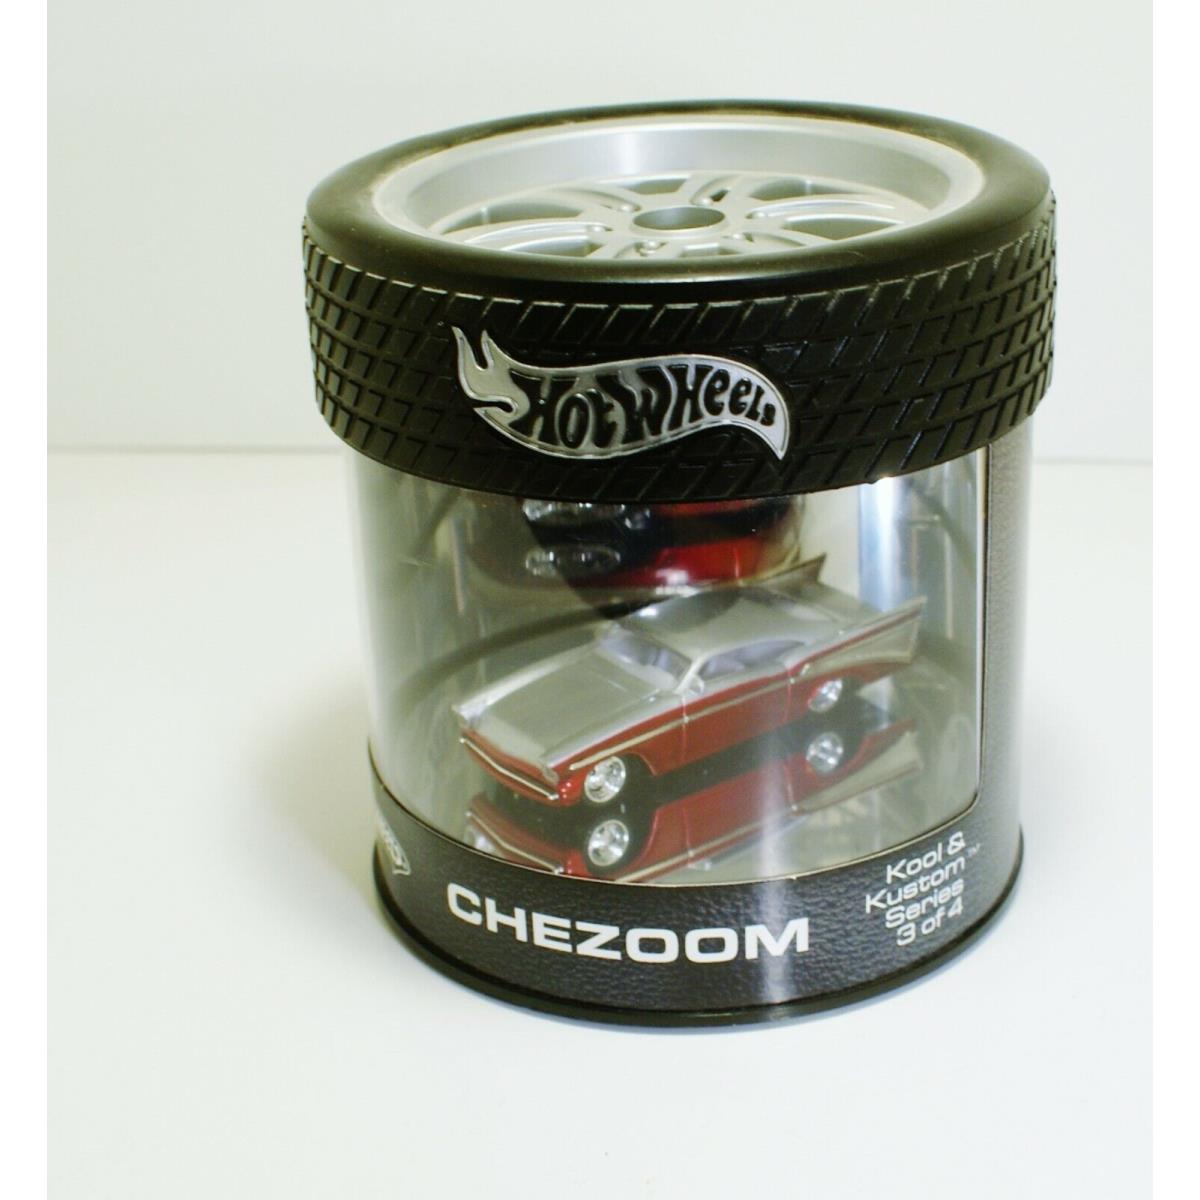 Hot Wheels Vhtf Rare Kool Kustom Chezoom - 57 Chevy Oil Can Series Very Ltd